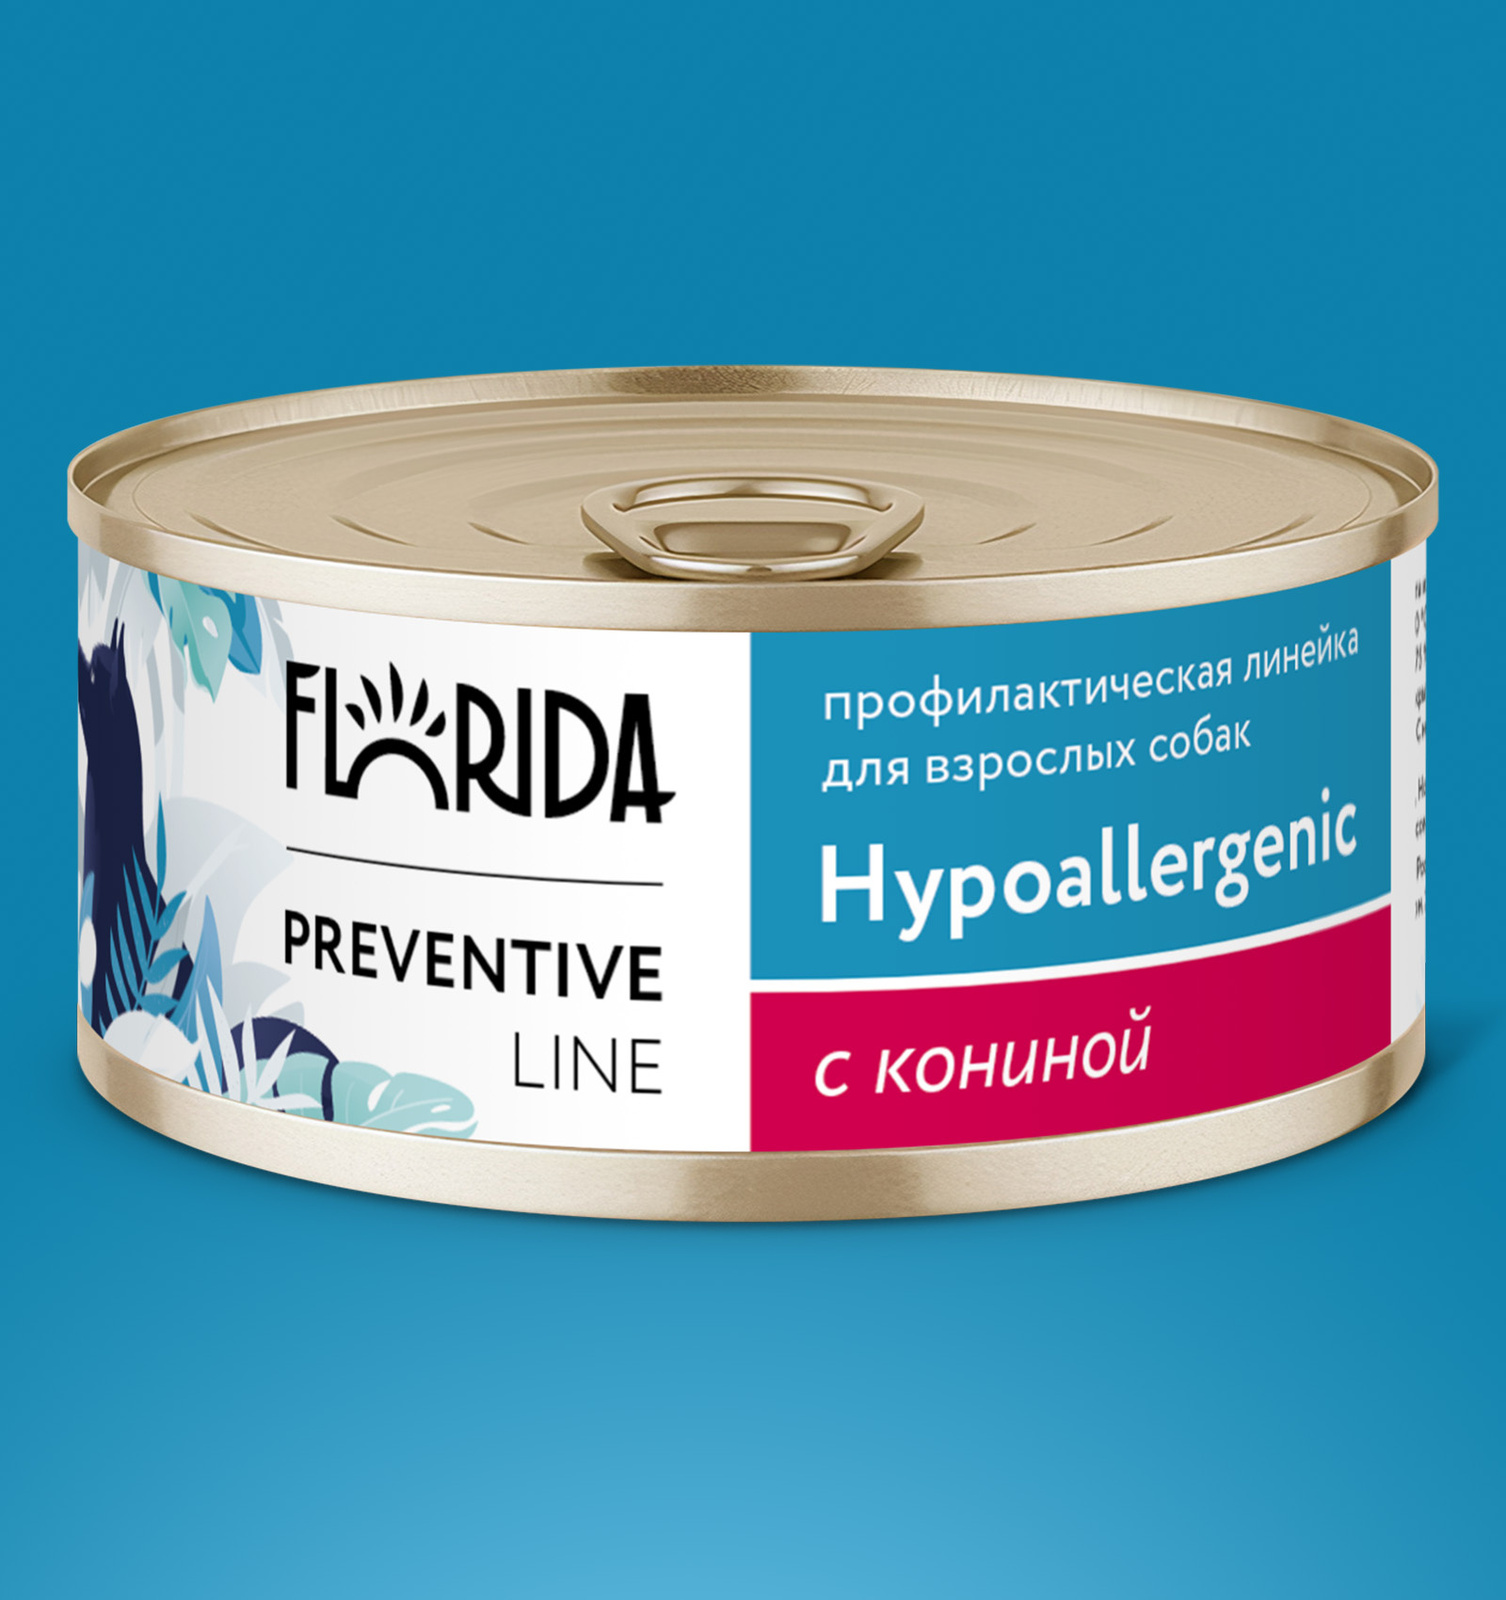 Florida Preventive Line консервы hypoallergenic для собак 